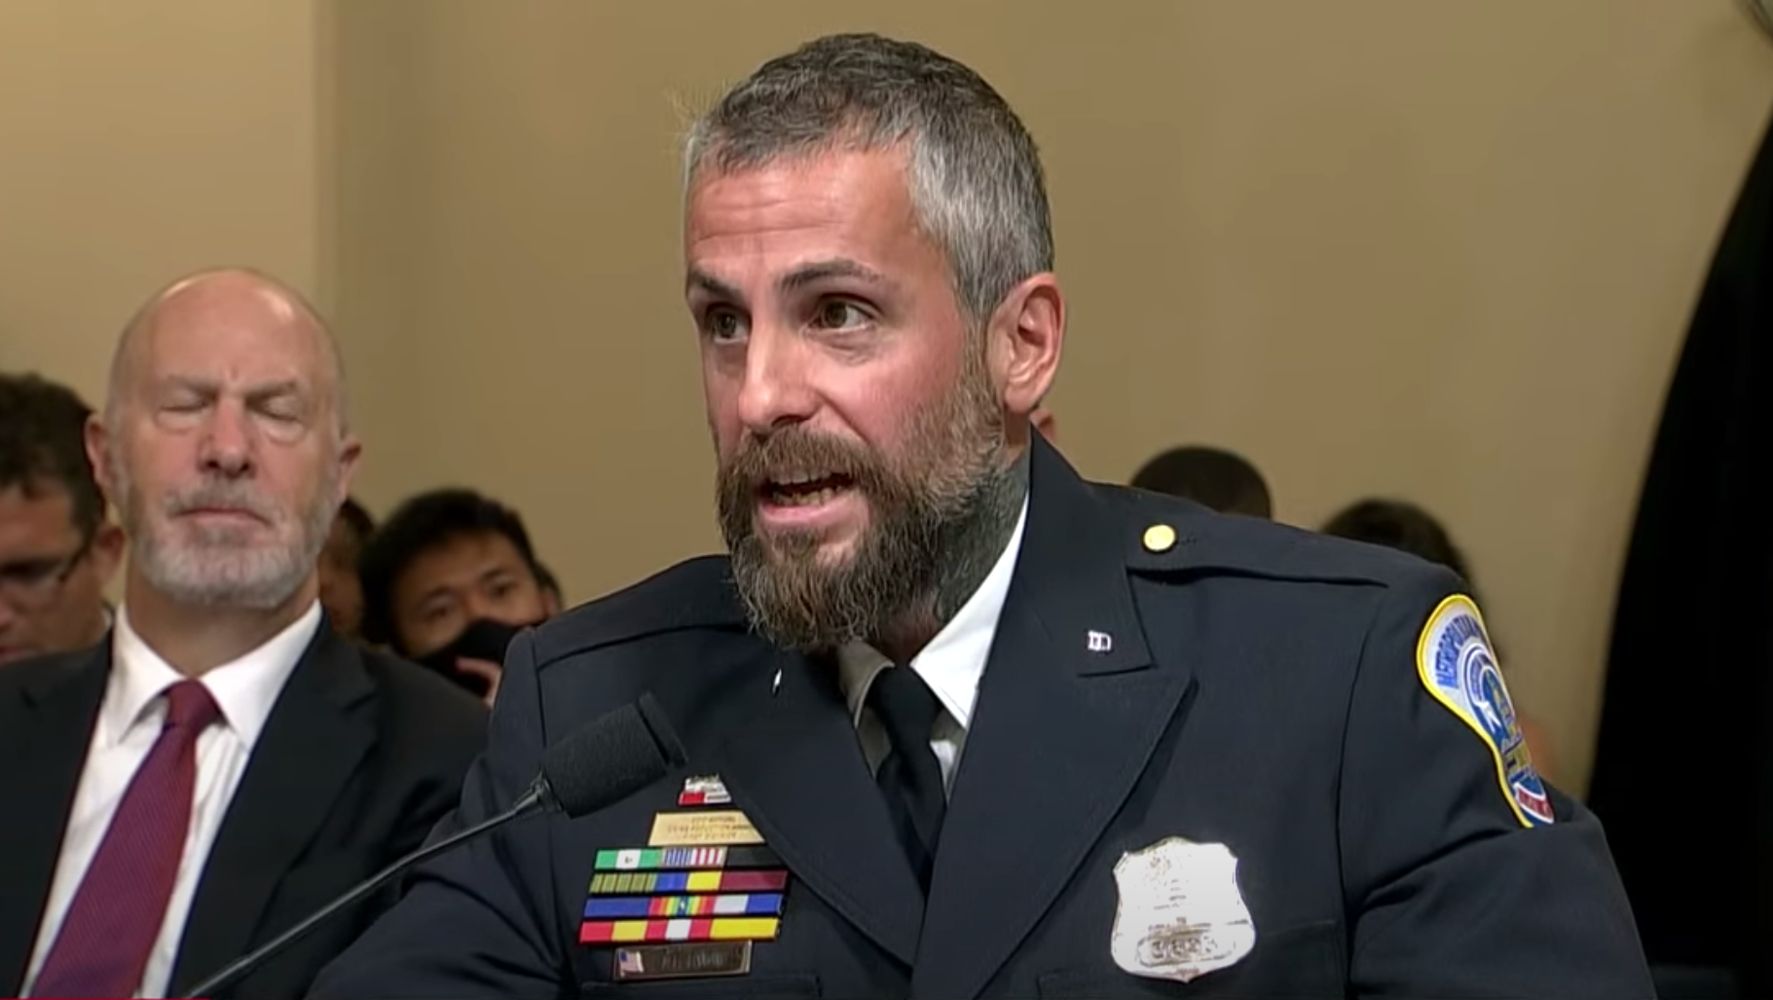 D.C. Police Officer Smacks Table During Emotional Jan. 6 Testimony